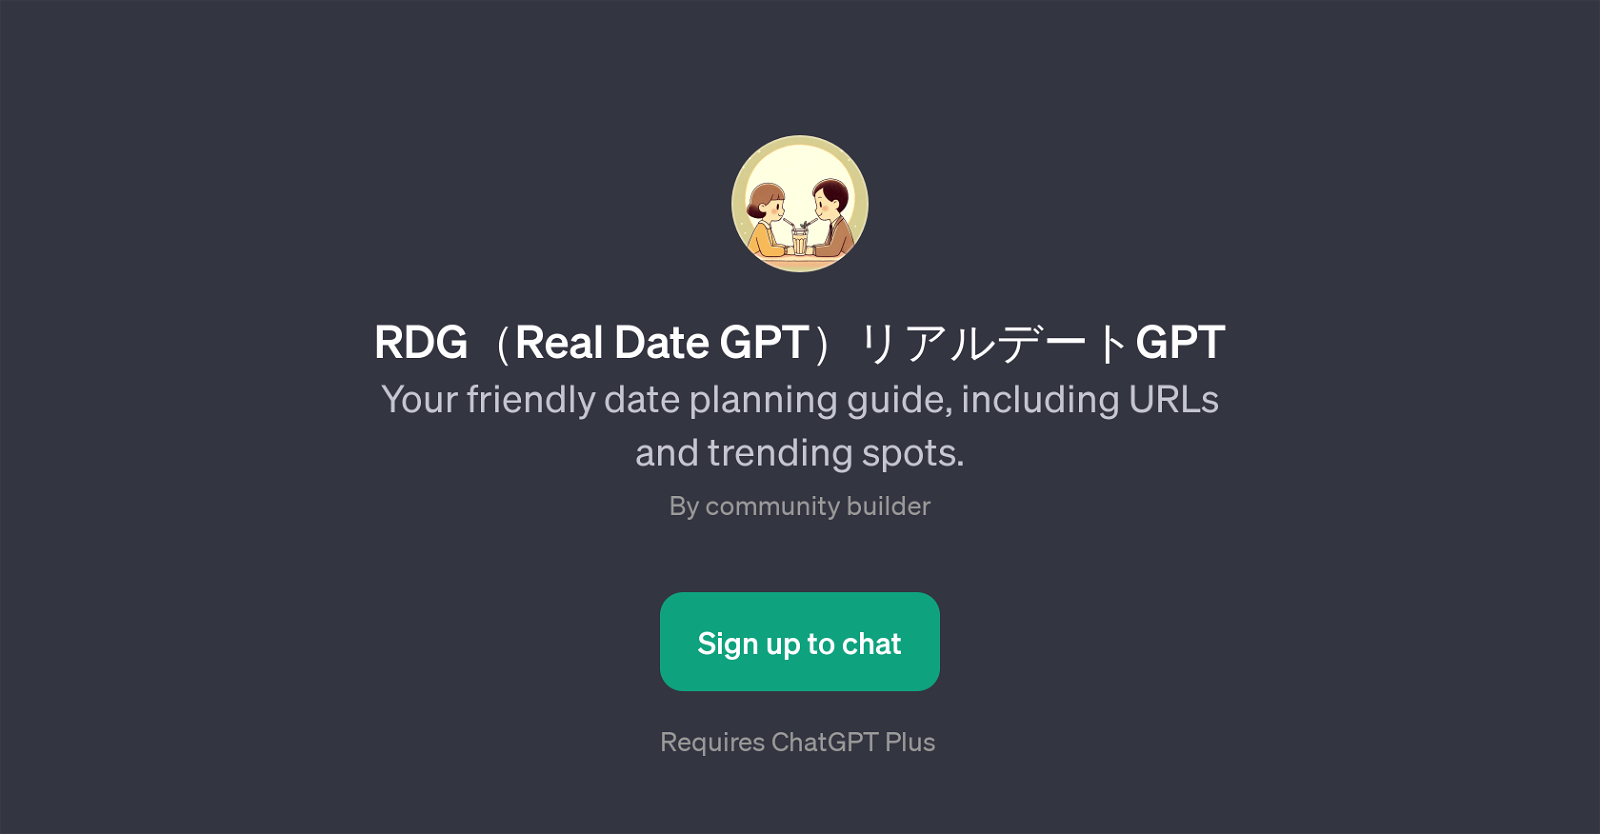 RDG (Real Date GPT) website